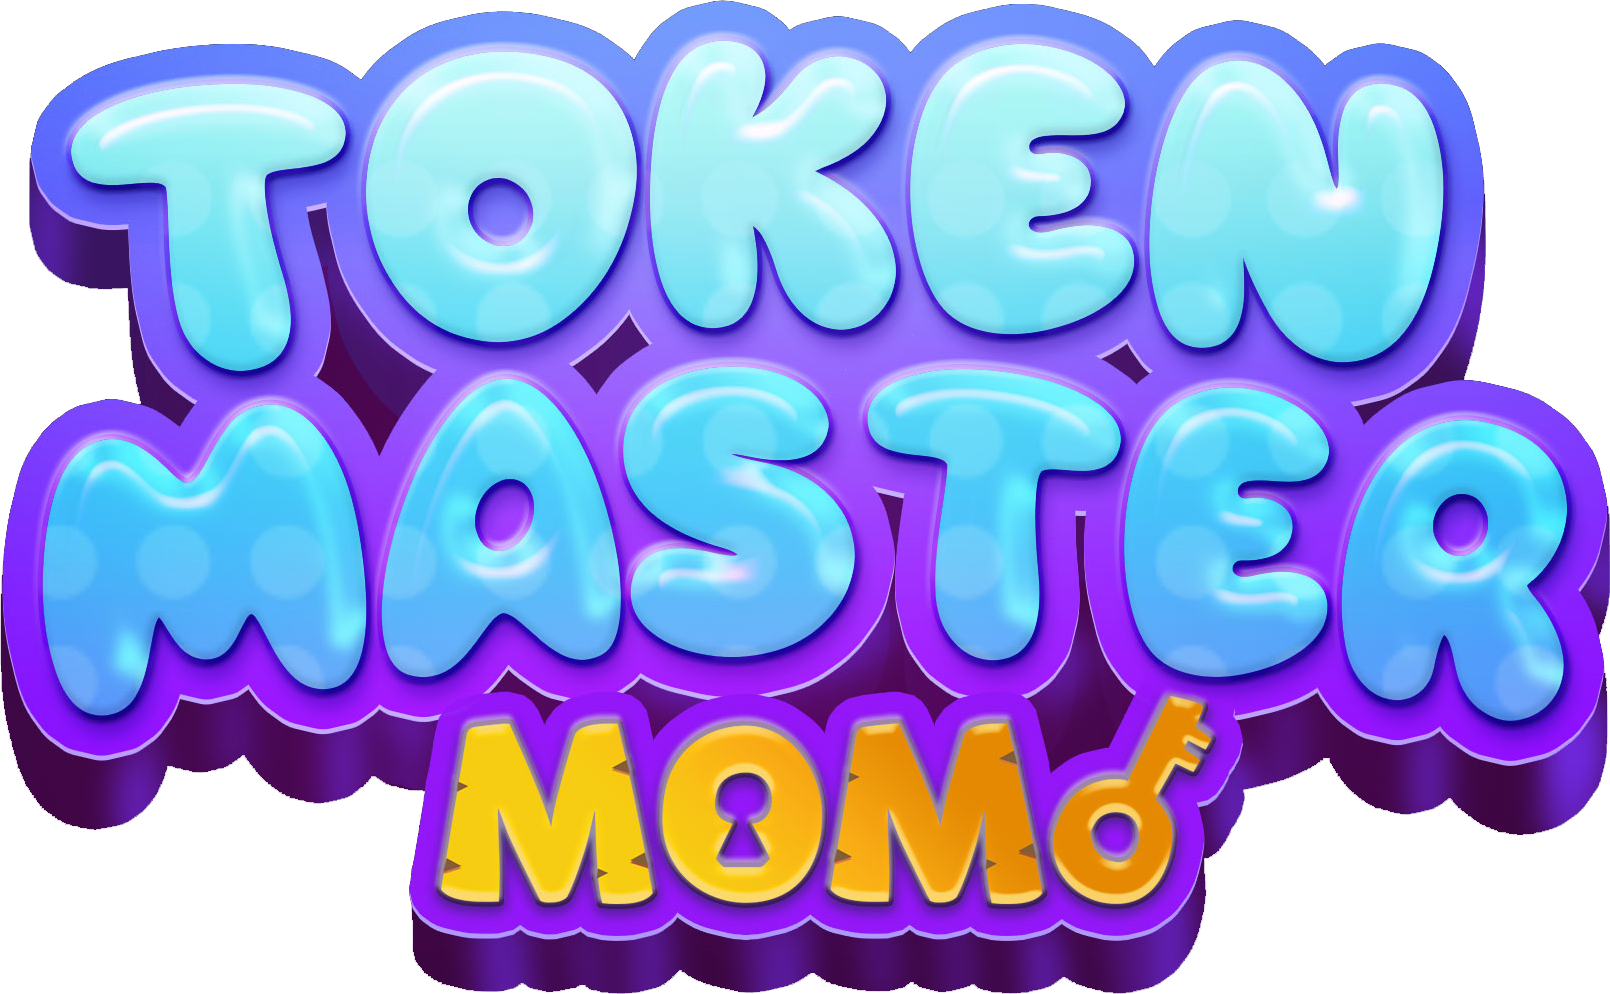 Chi tiết về MOMO Token Master – Phần 4